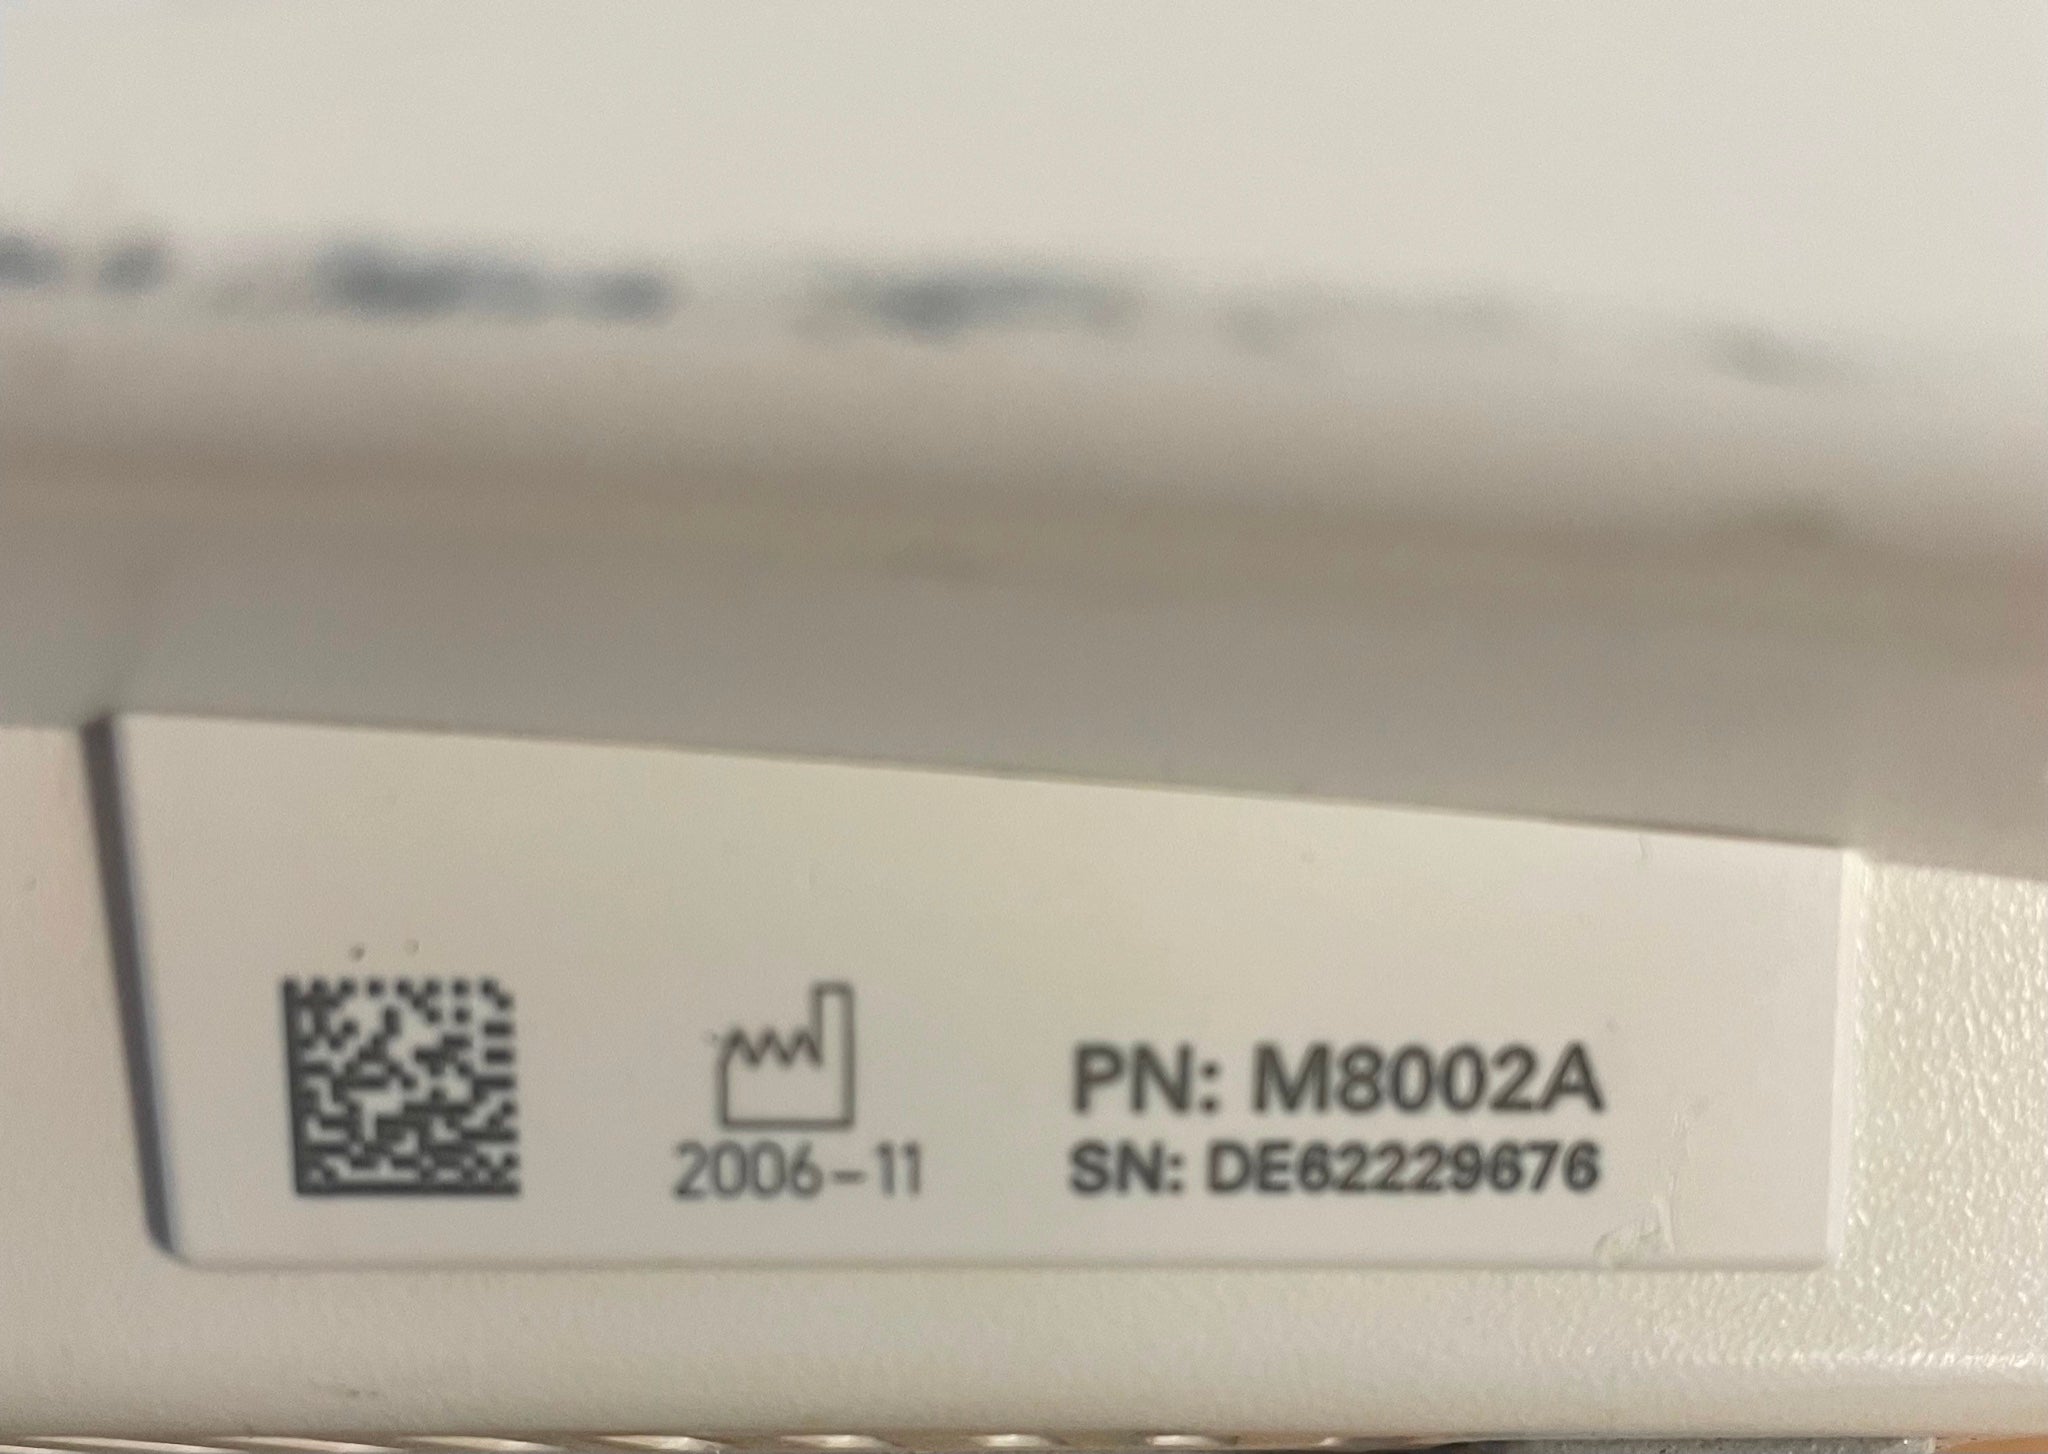 Philips IntelliVue MP30 Color Patient Monitor SN:DE62229676 REF:M8002A DIAGNOSTIC ULTRASOUND MACHINES FOR SALE